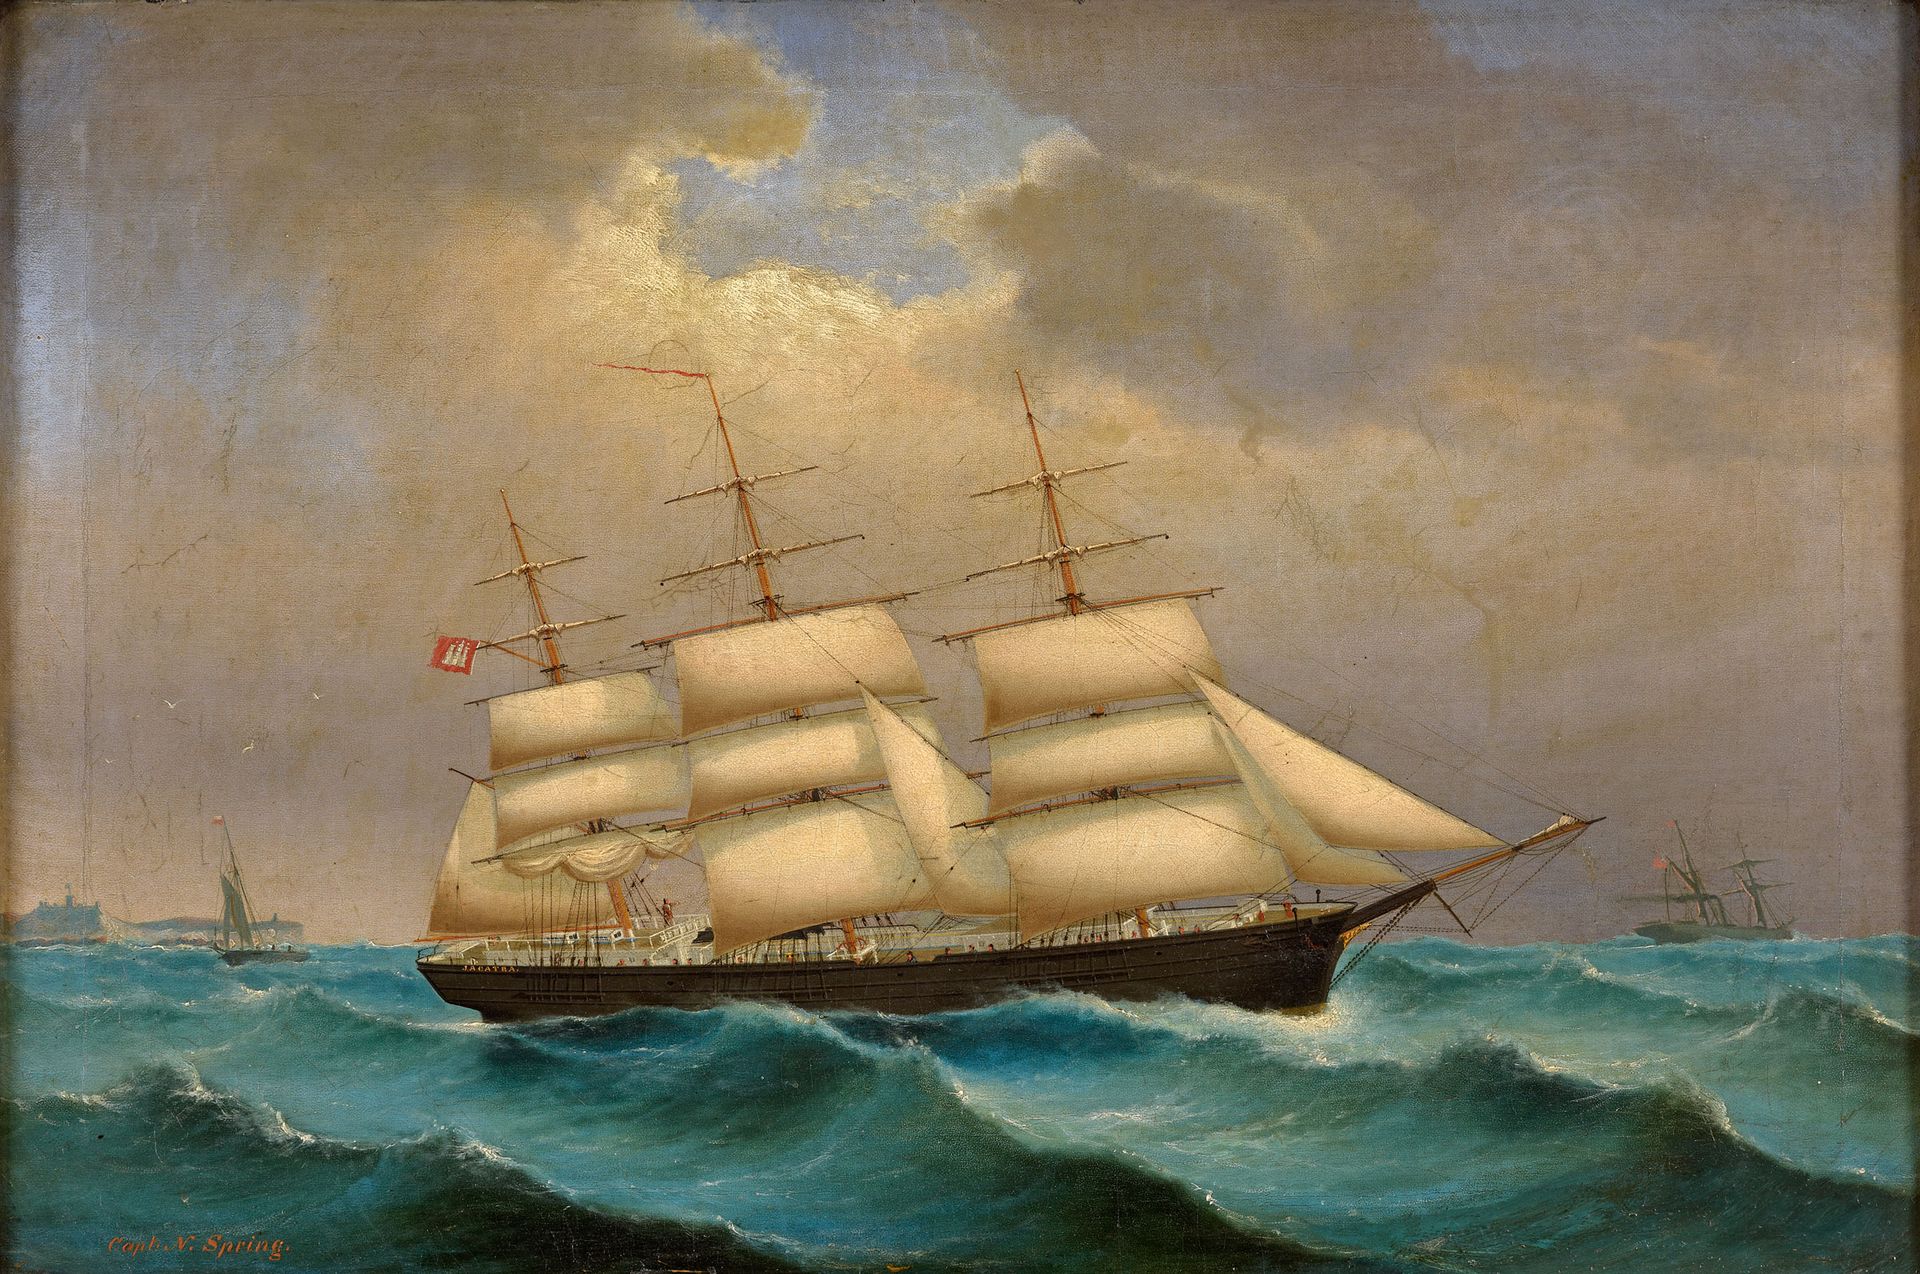 Kapitänsbild Captain's painting 19th c.
The Jacatra, Captain N. Spring.
Titled. &hellip;